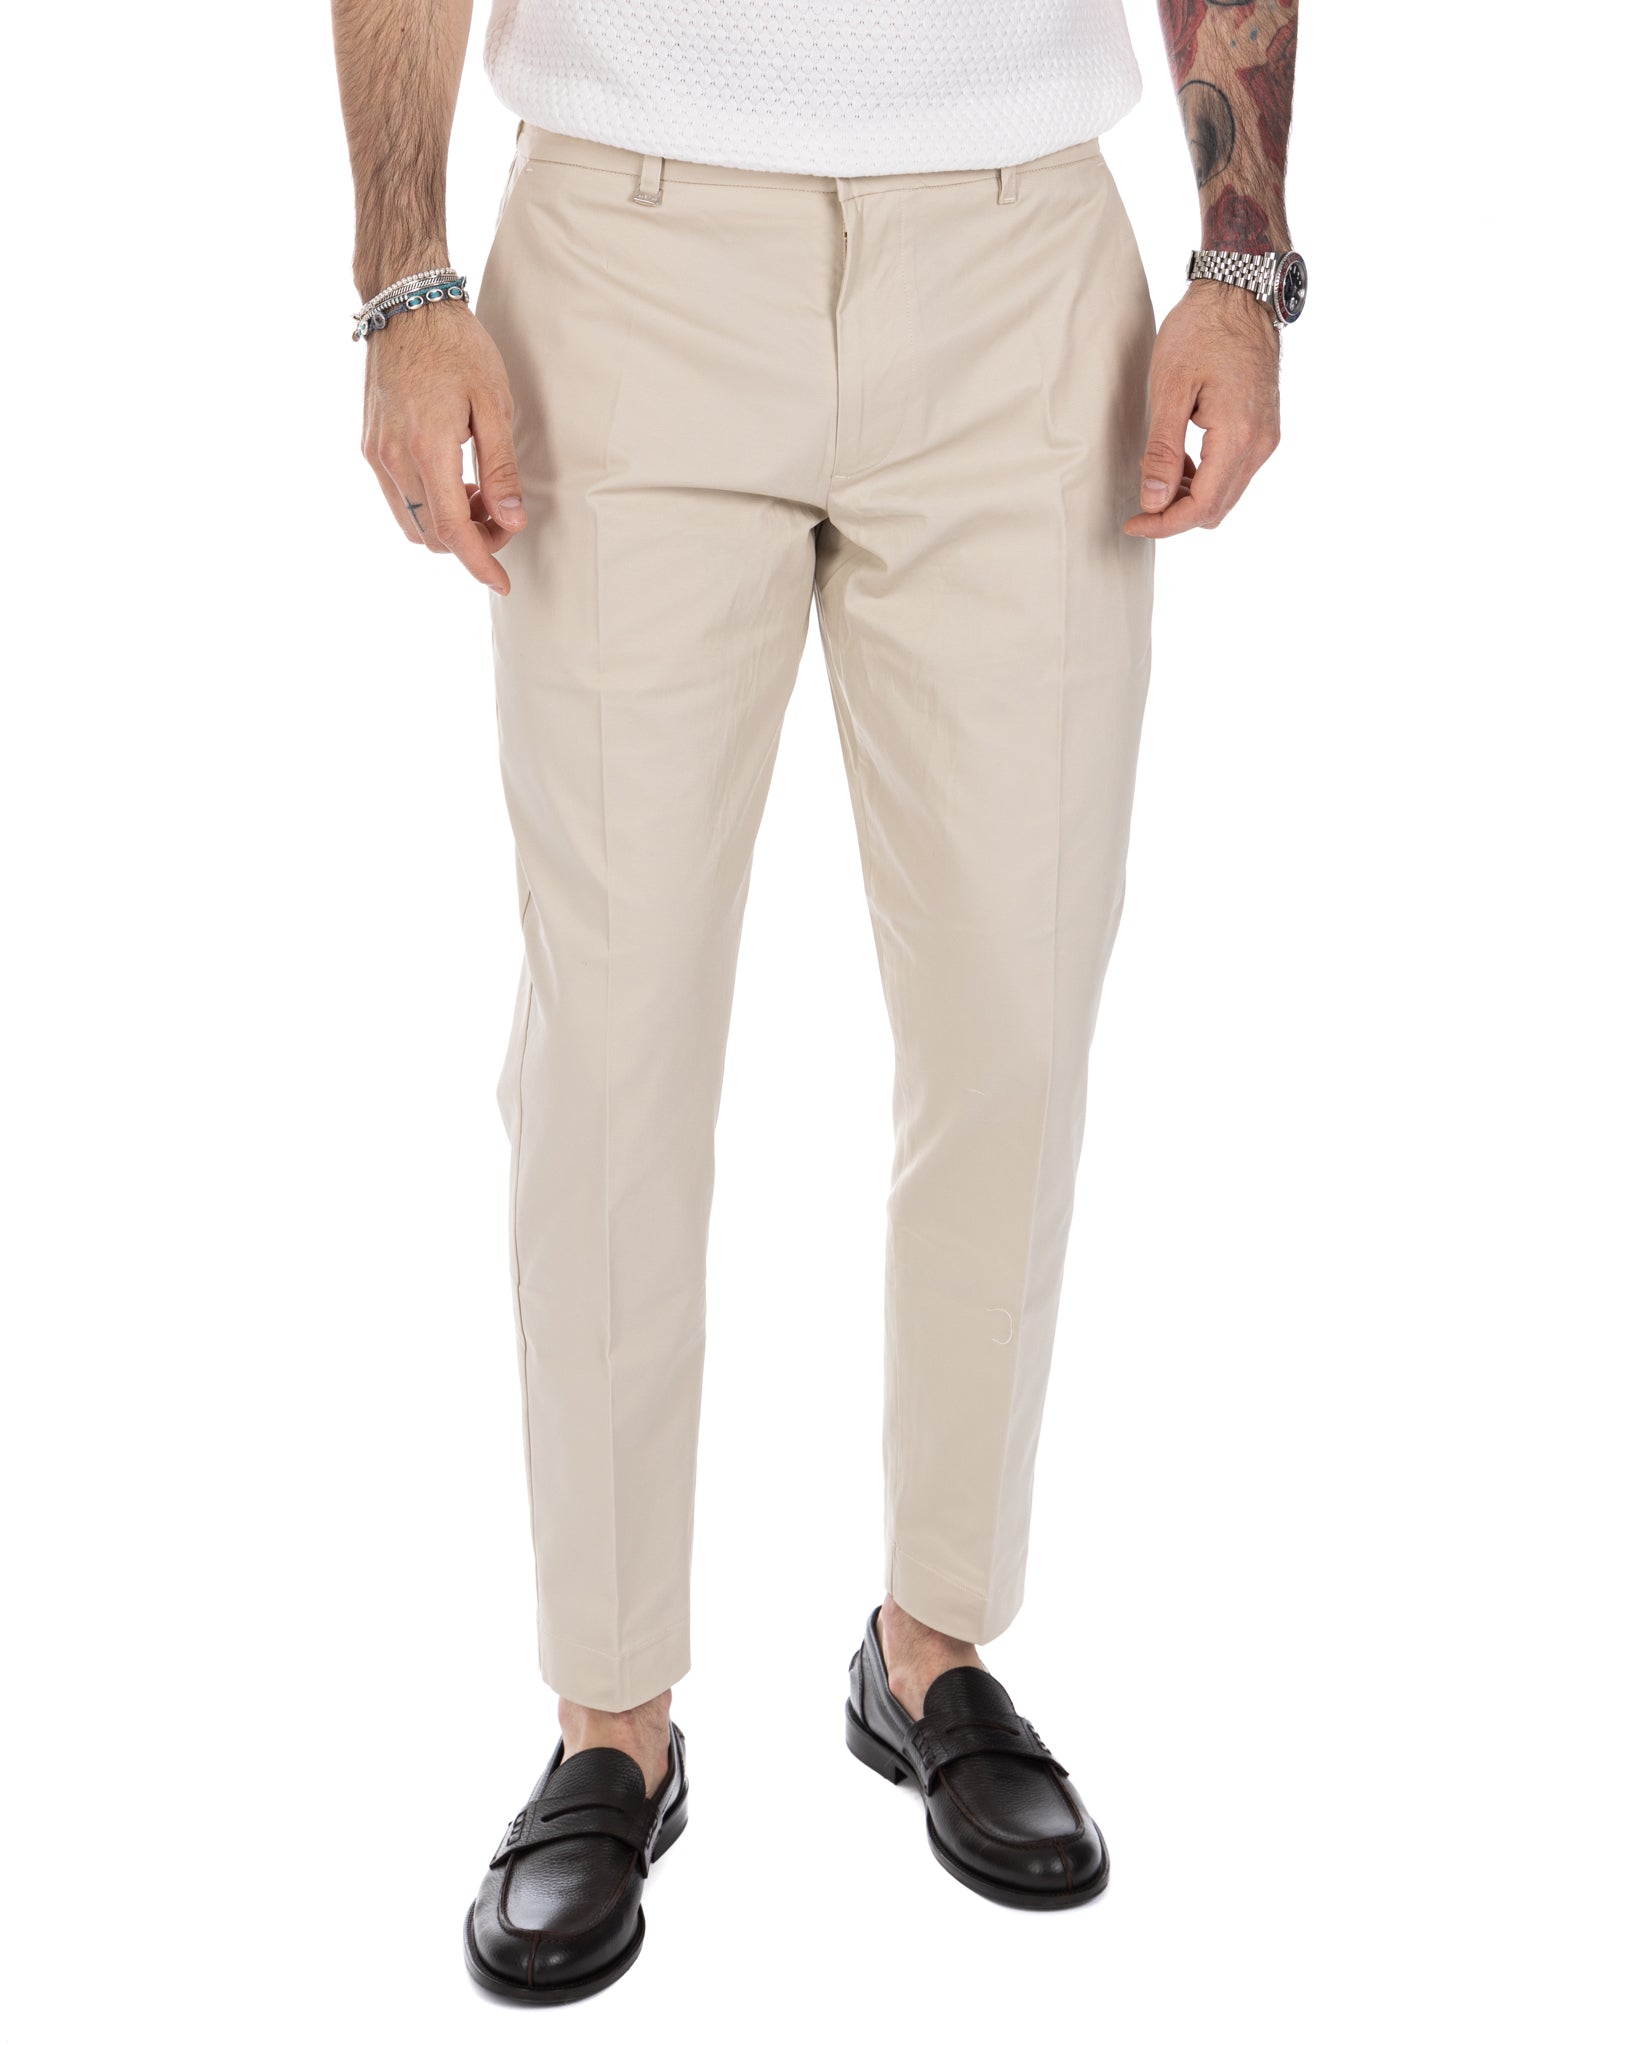 Elder - beige capri trousers in summer cotton